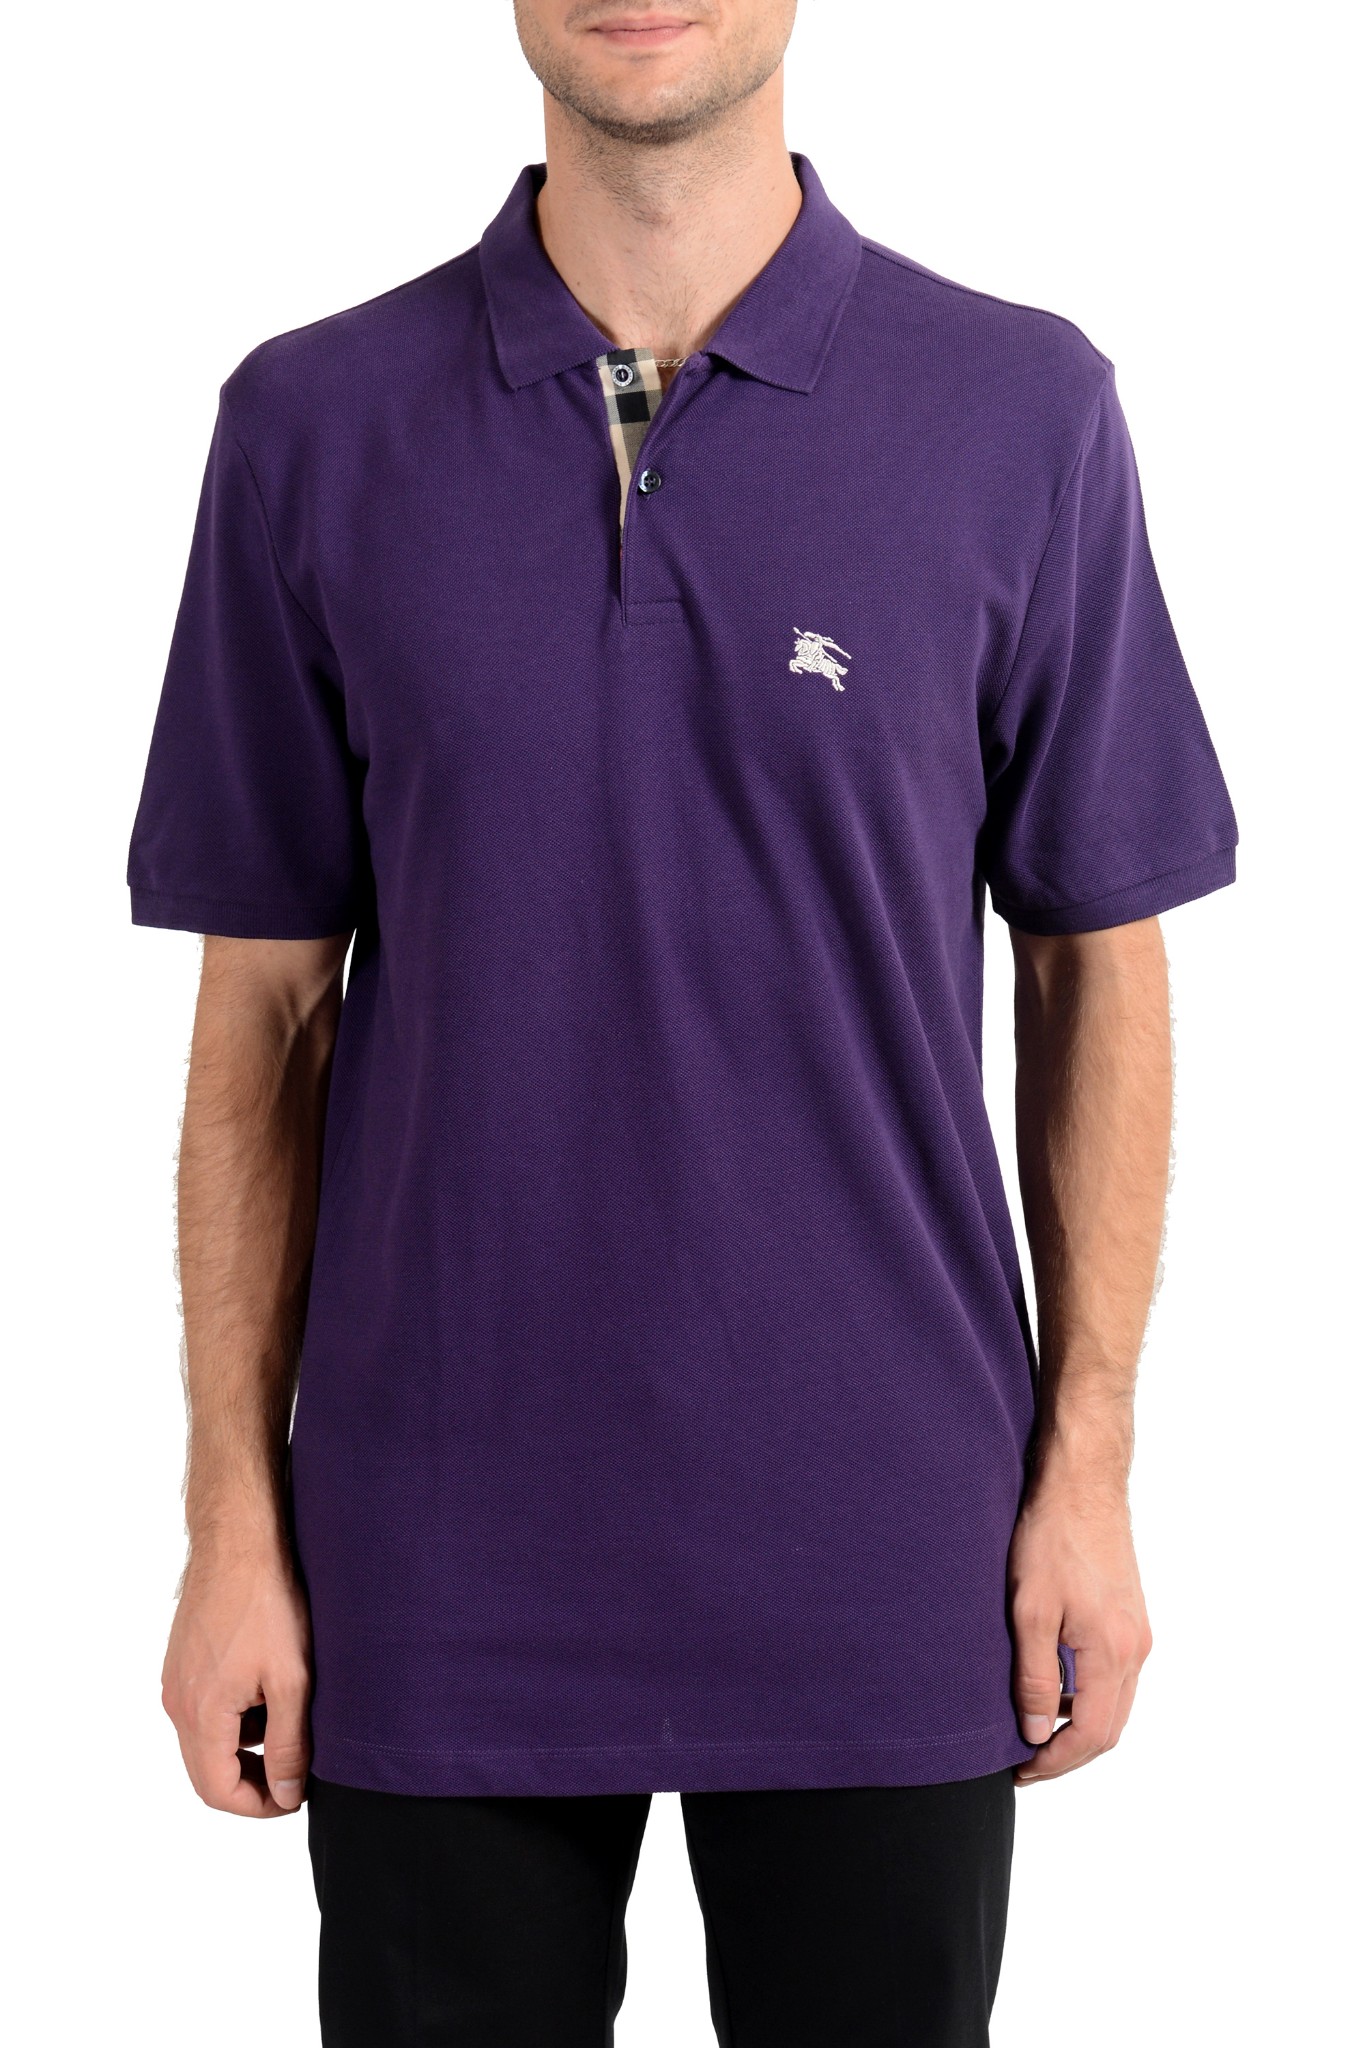 mens purple burberry shirt